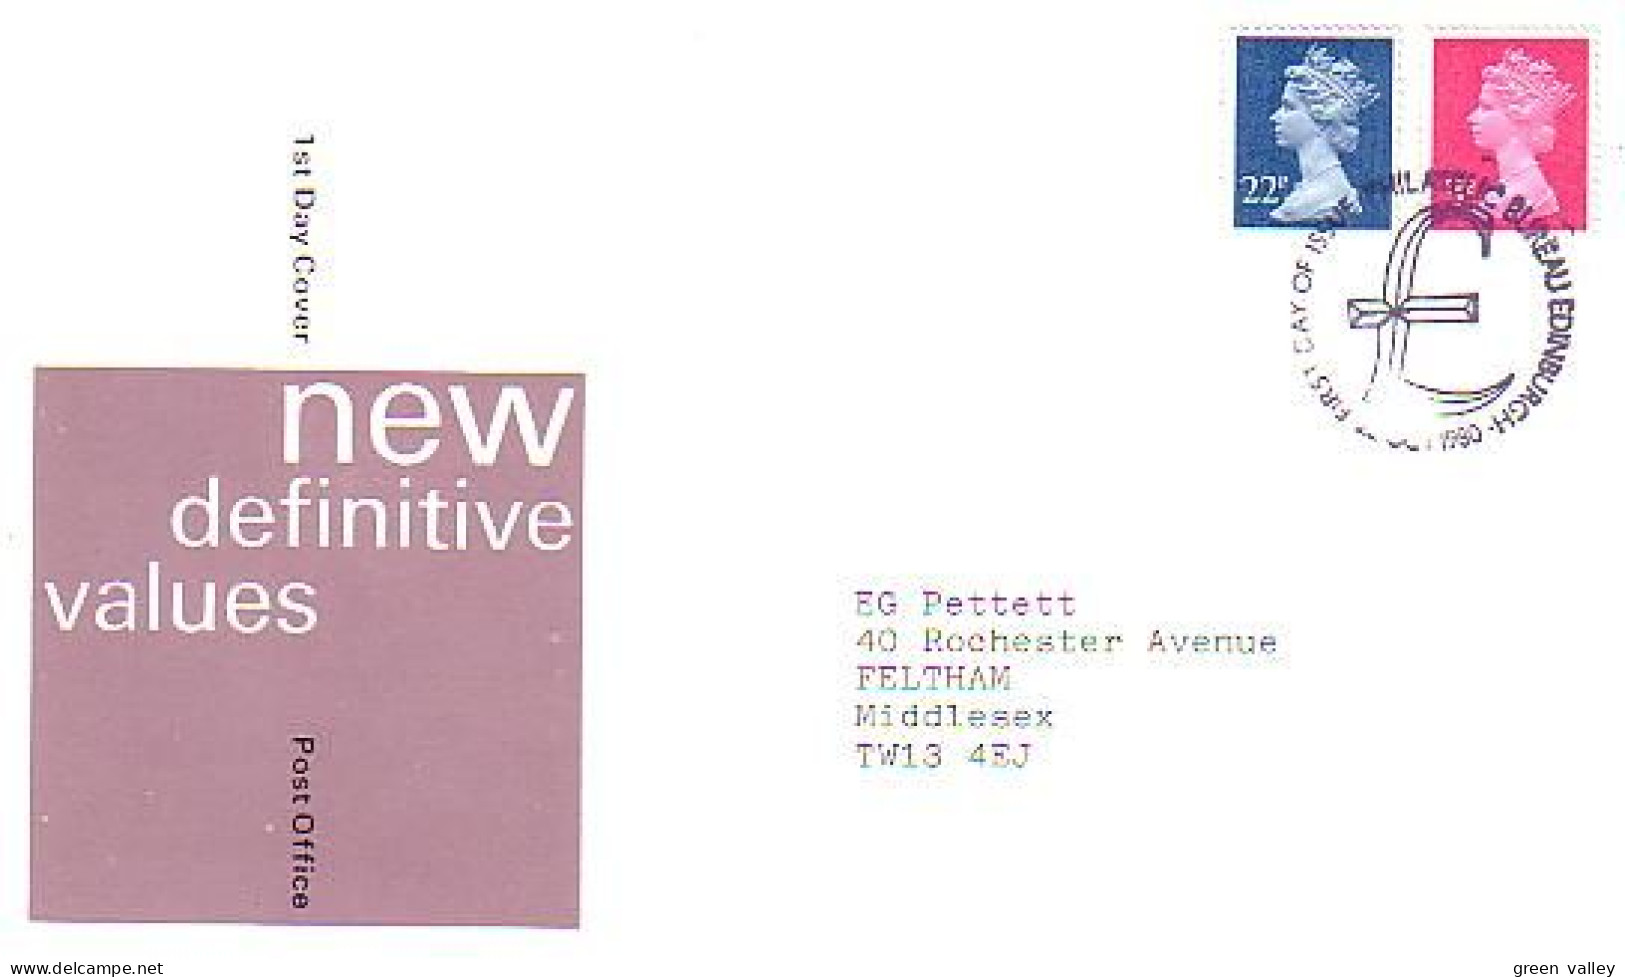 Machin 22 OCT 1980 23p 22p On Edinburgh Philatelic Bureau Handstamp FDC Cover ( A80 741) - Ecosse